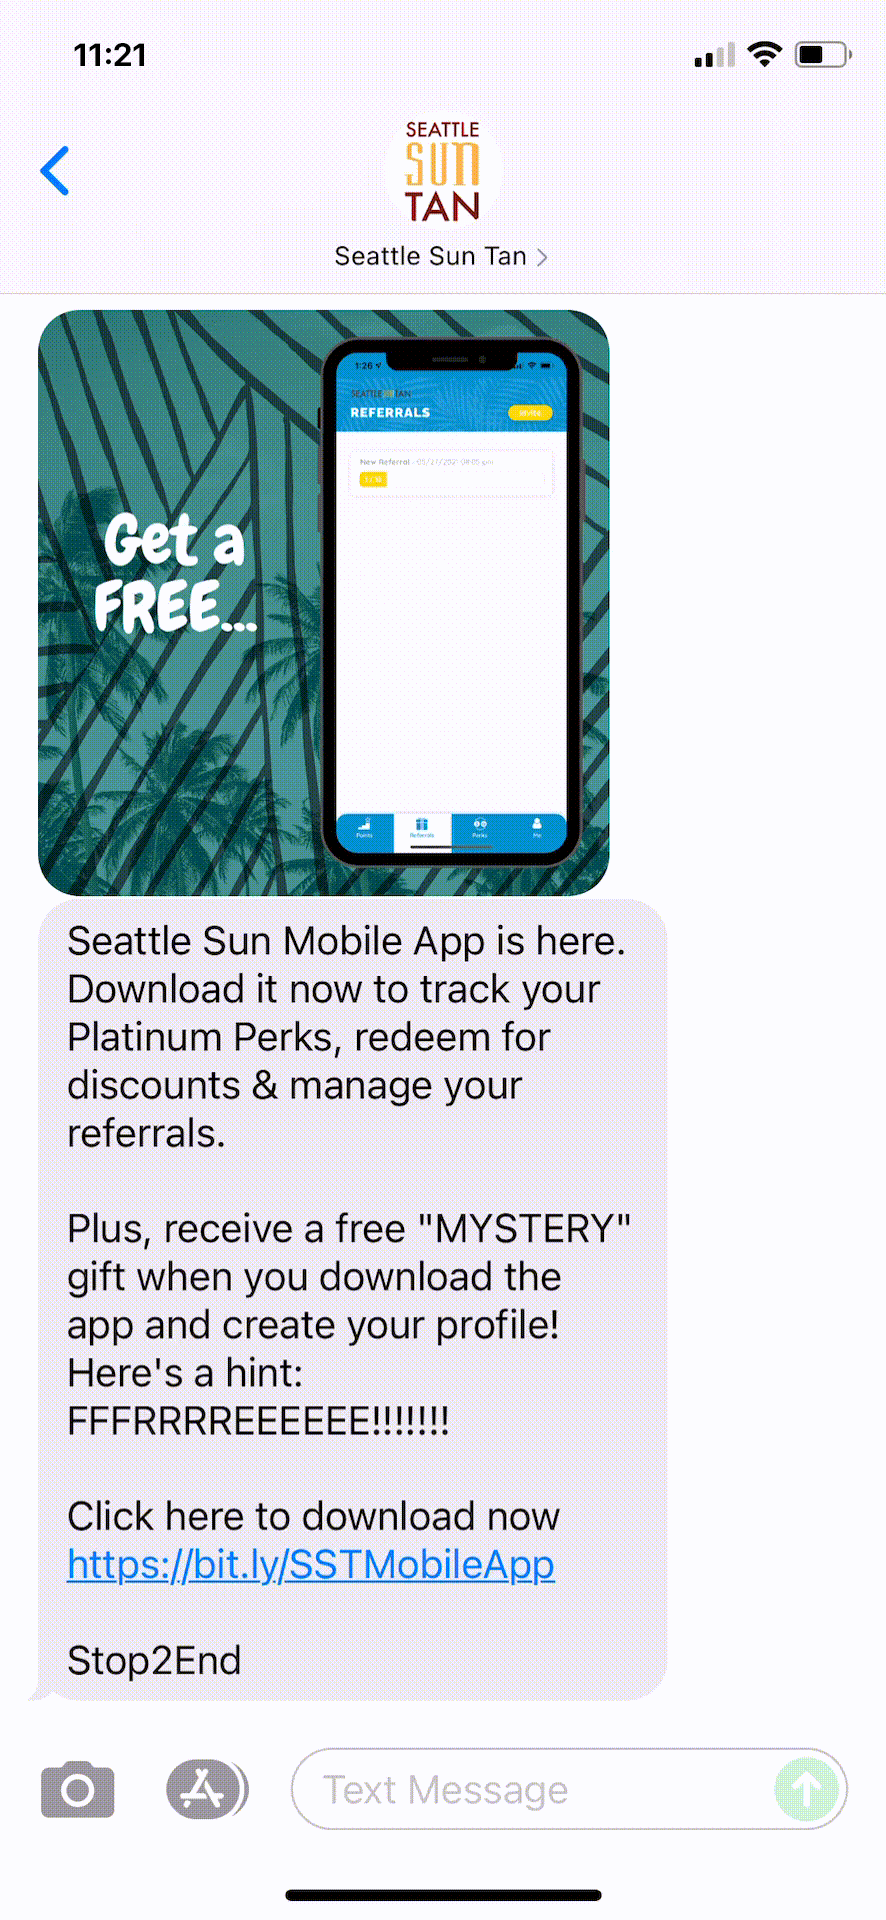 Seattle-Sun-Tan-Text-Message-Marketing-Example-07.08.2021